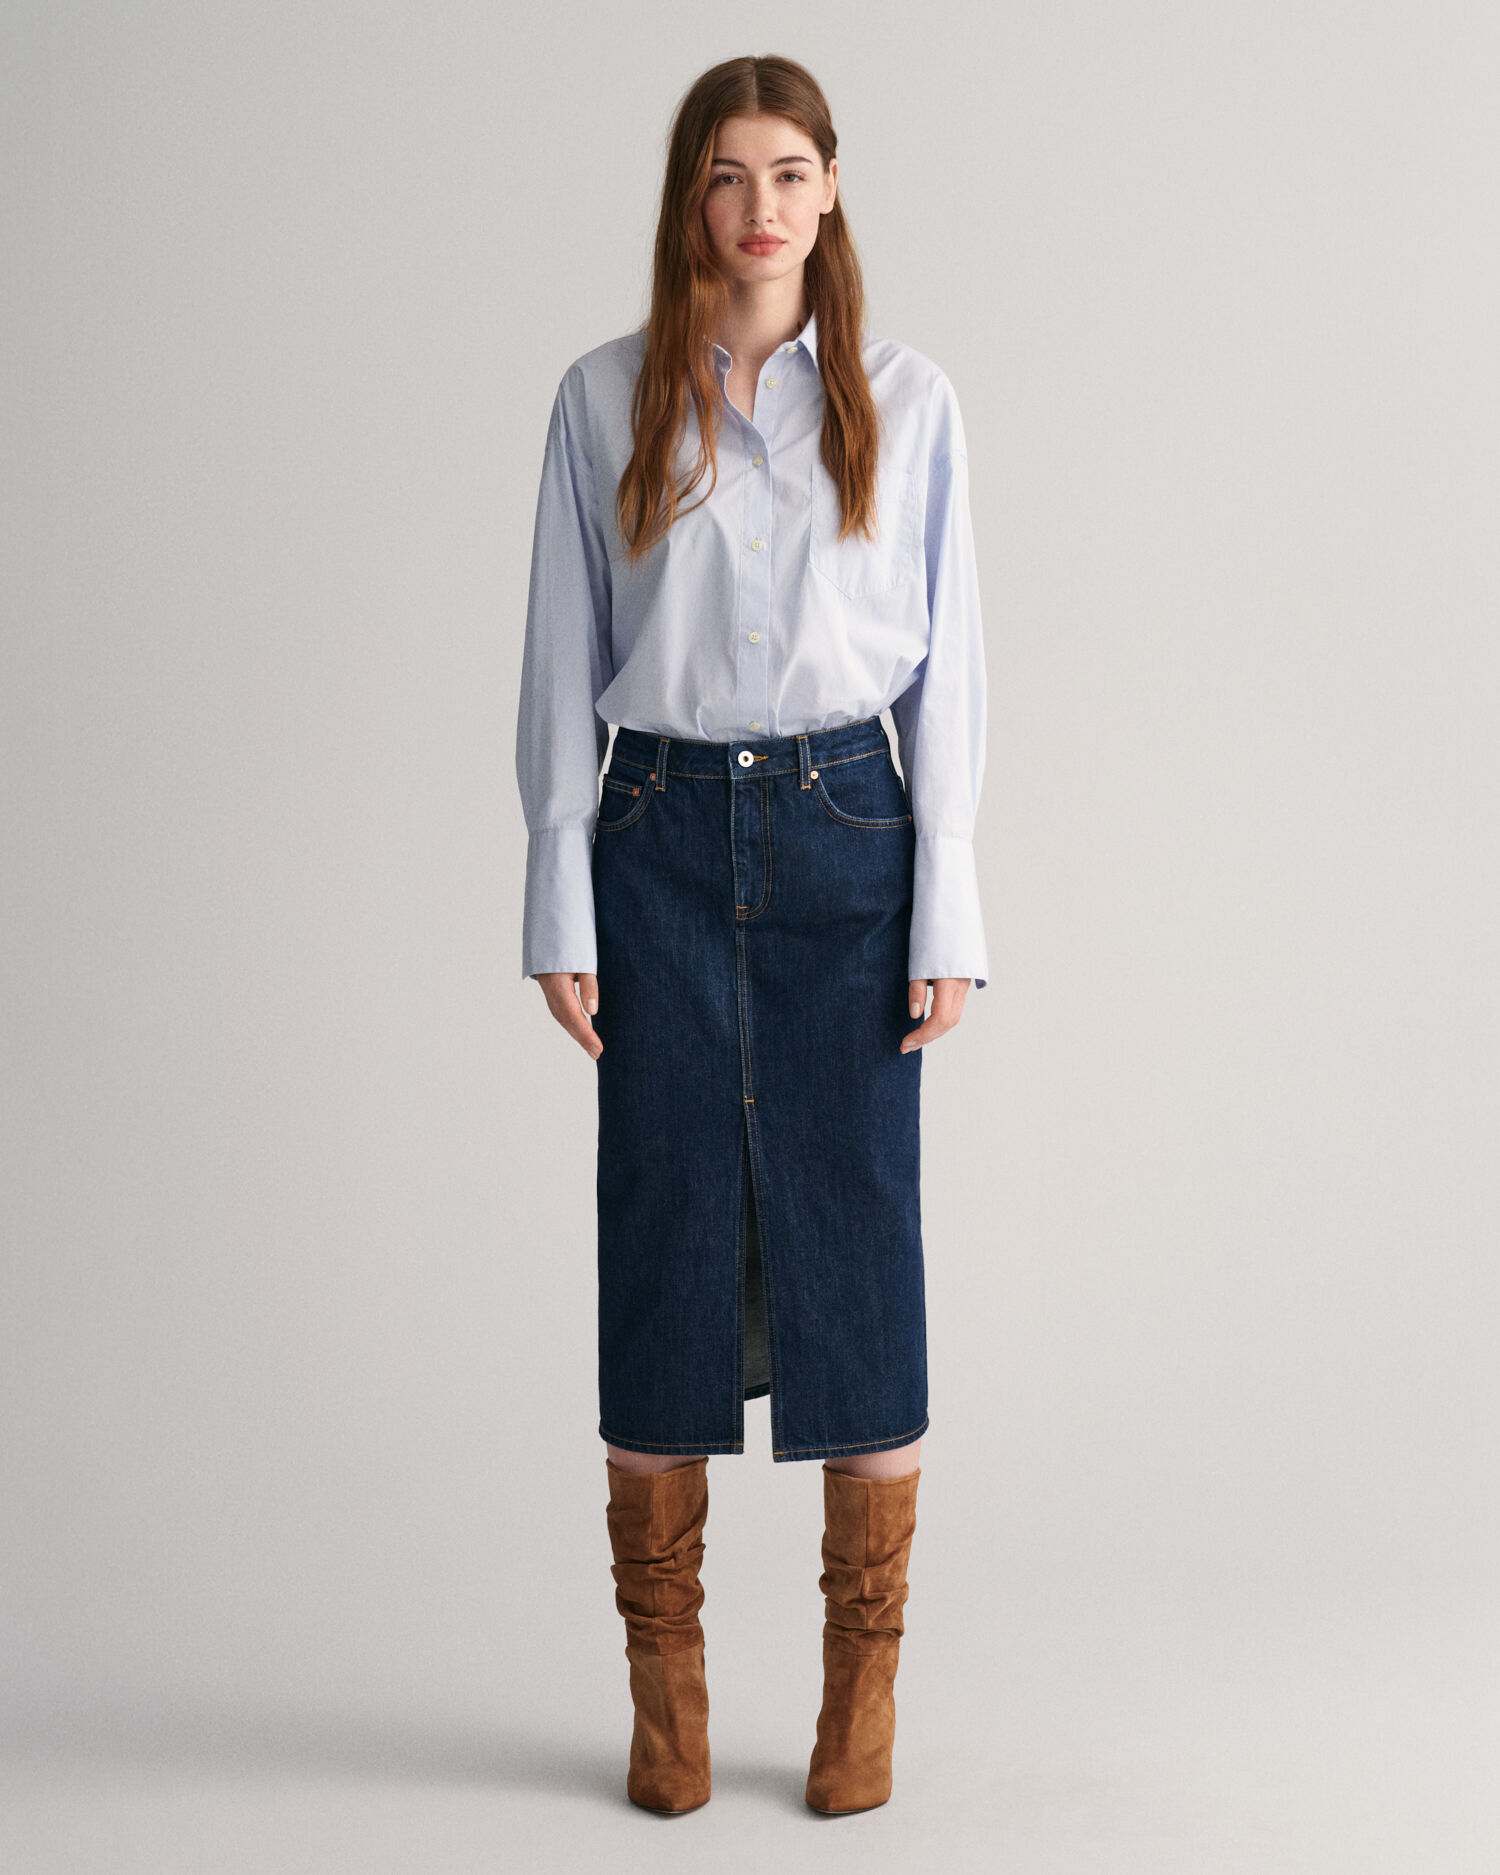 Knee-length denim skirt - Denim blue - Ladies | H&M IN